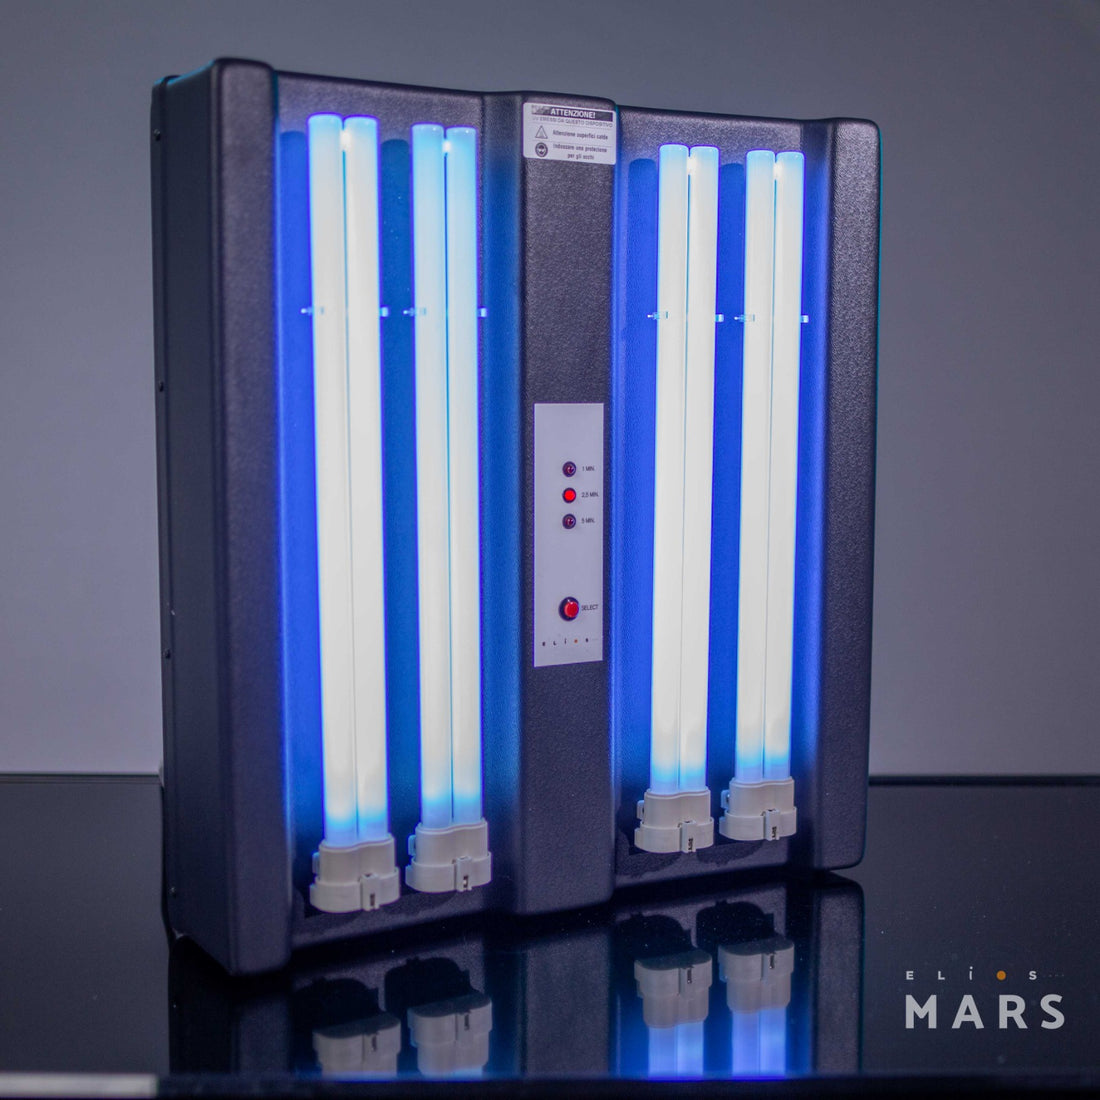 Elioslamp - Mars (UV Lamp)